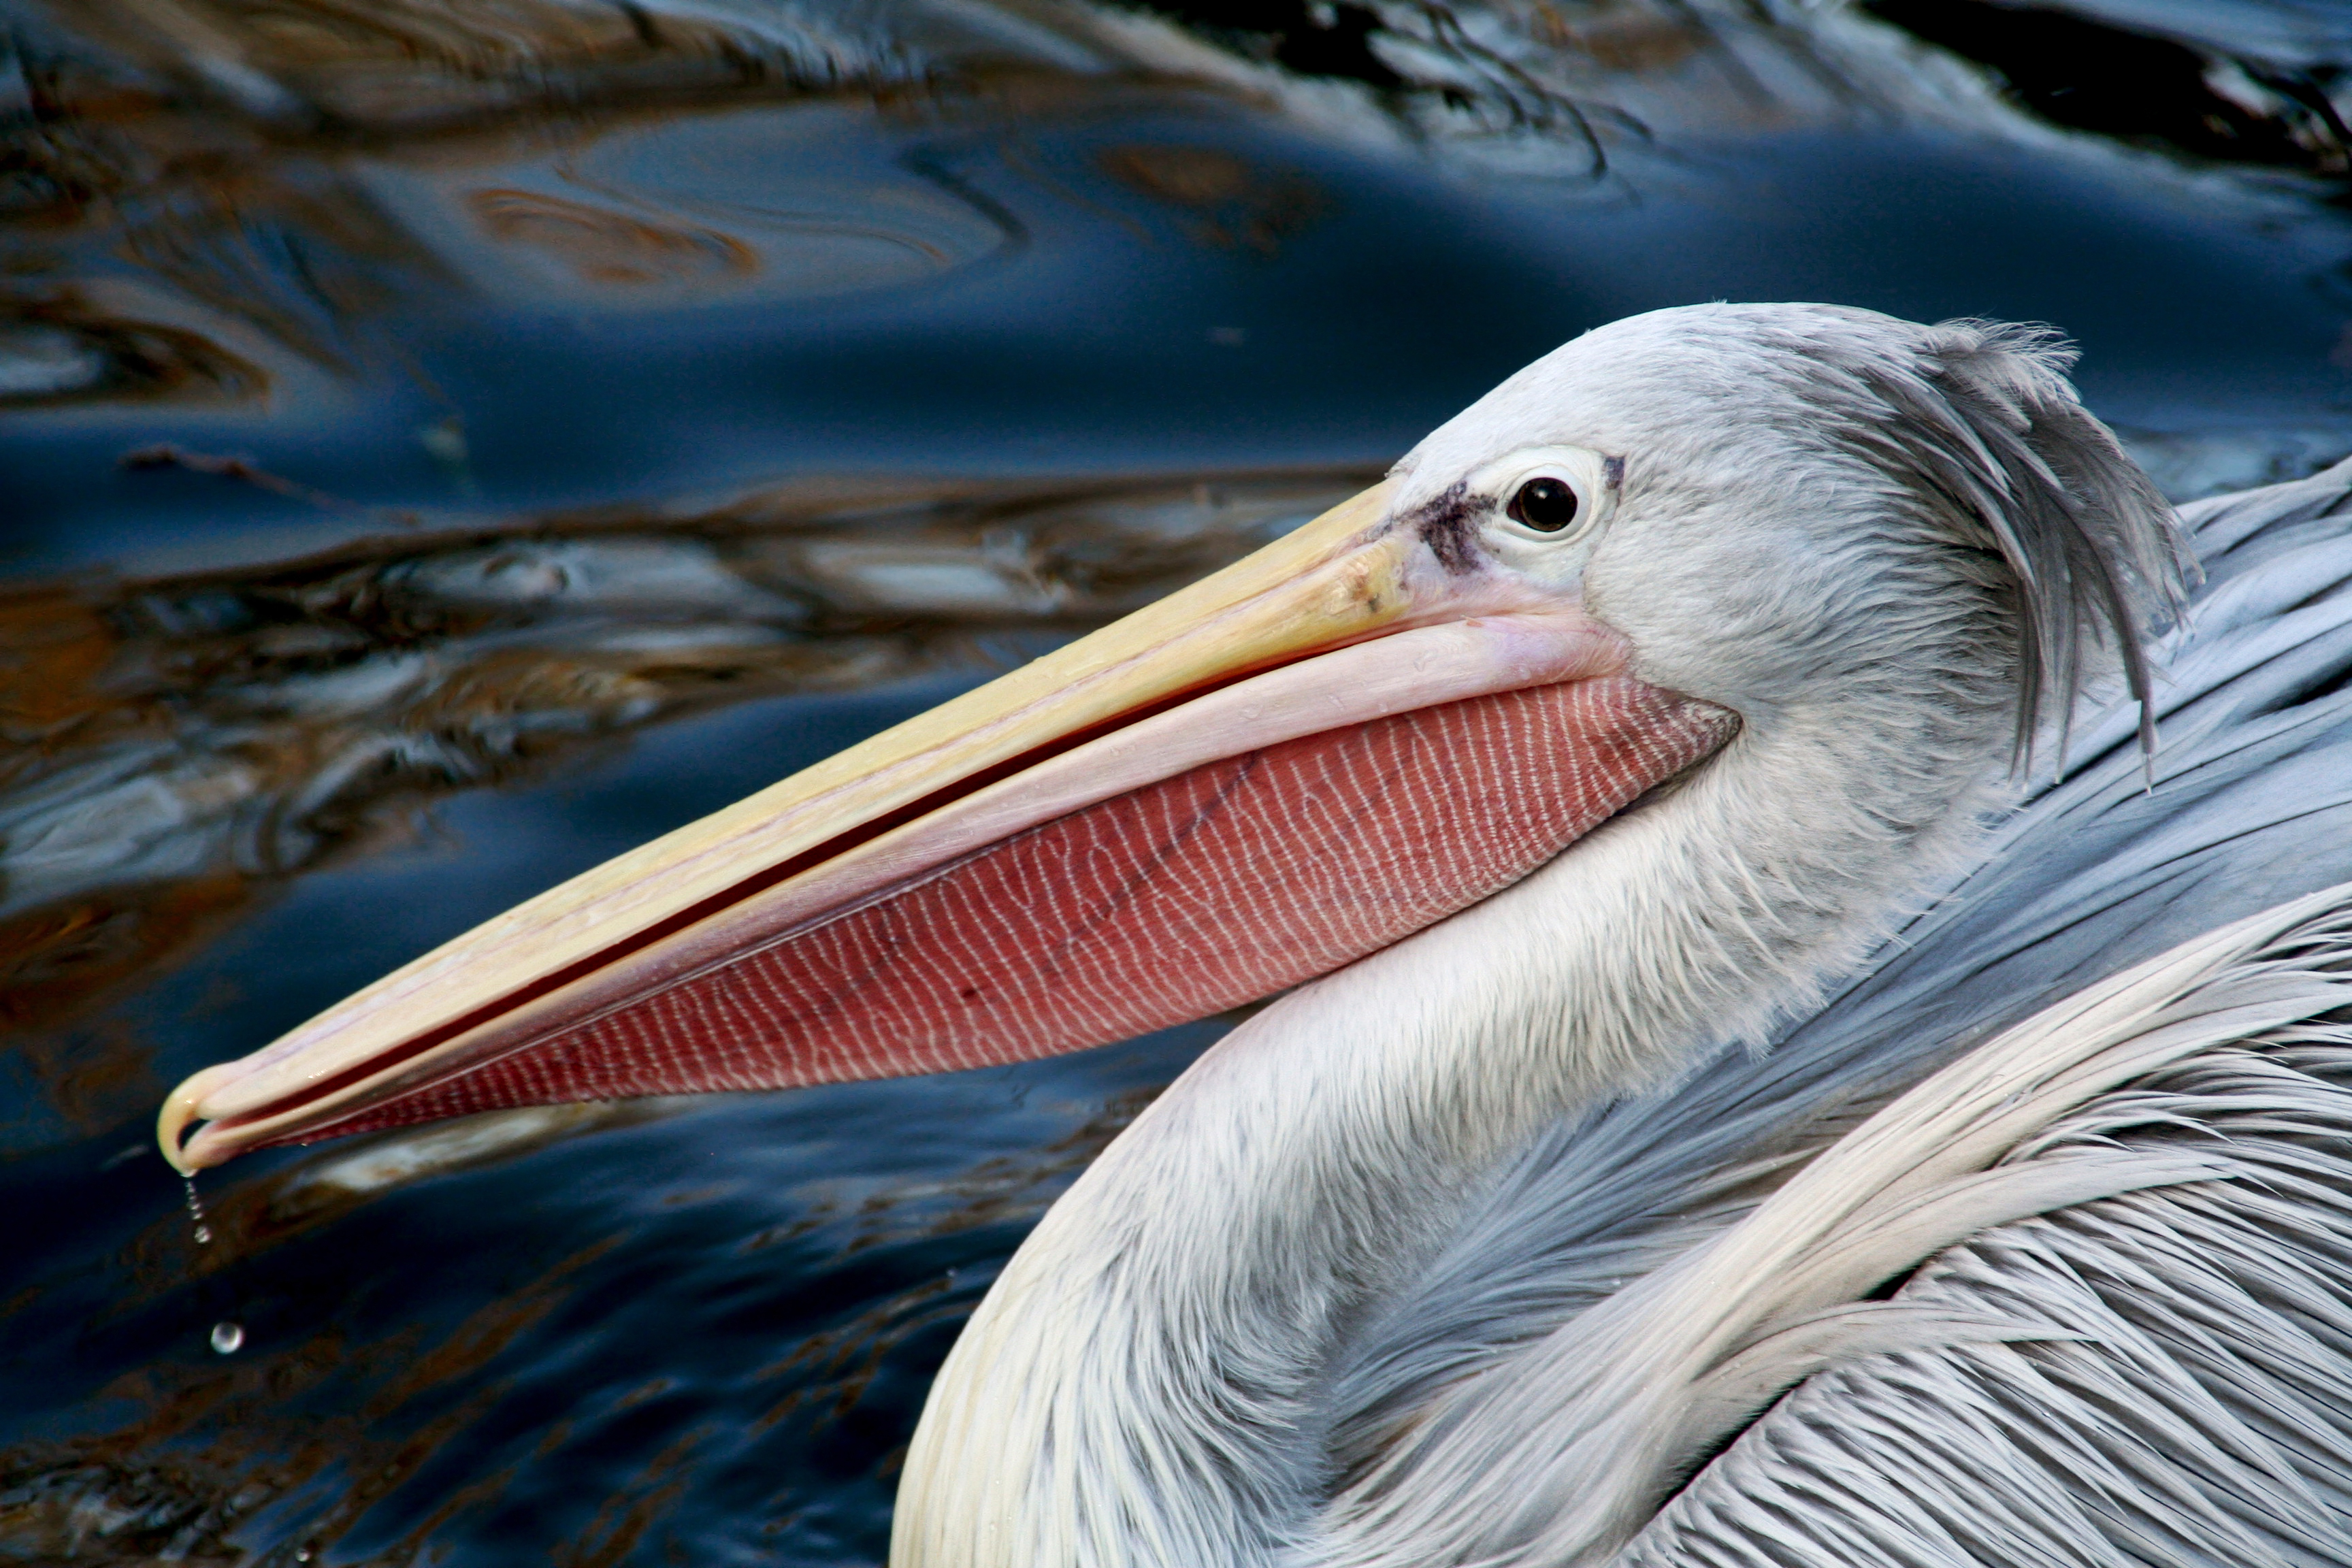 File:Pelican-pink-backed.jpg - Wikipedia